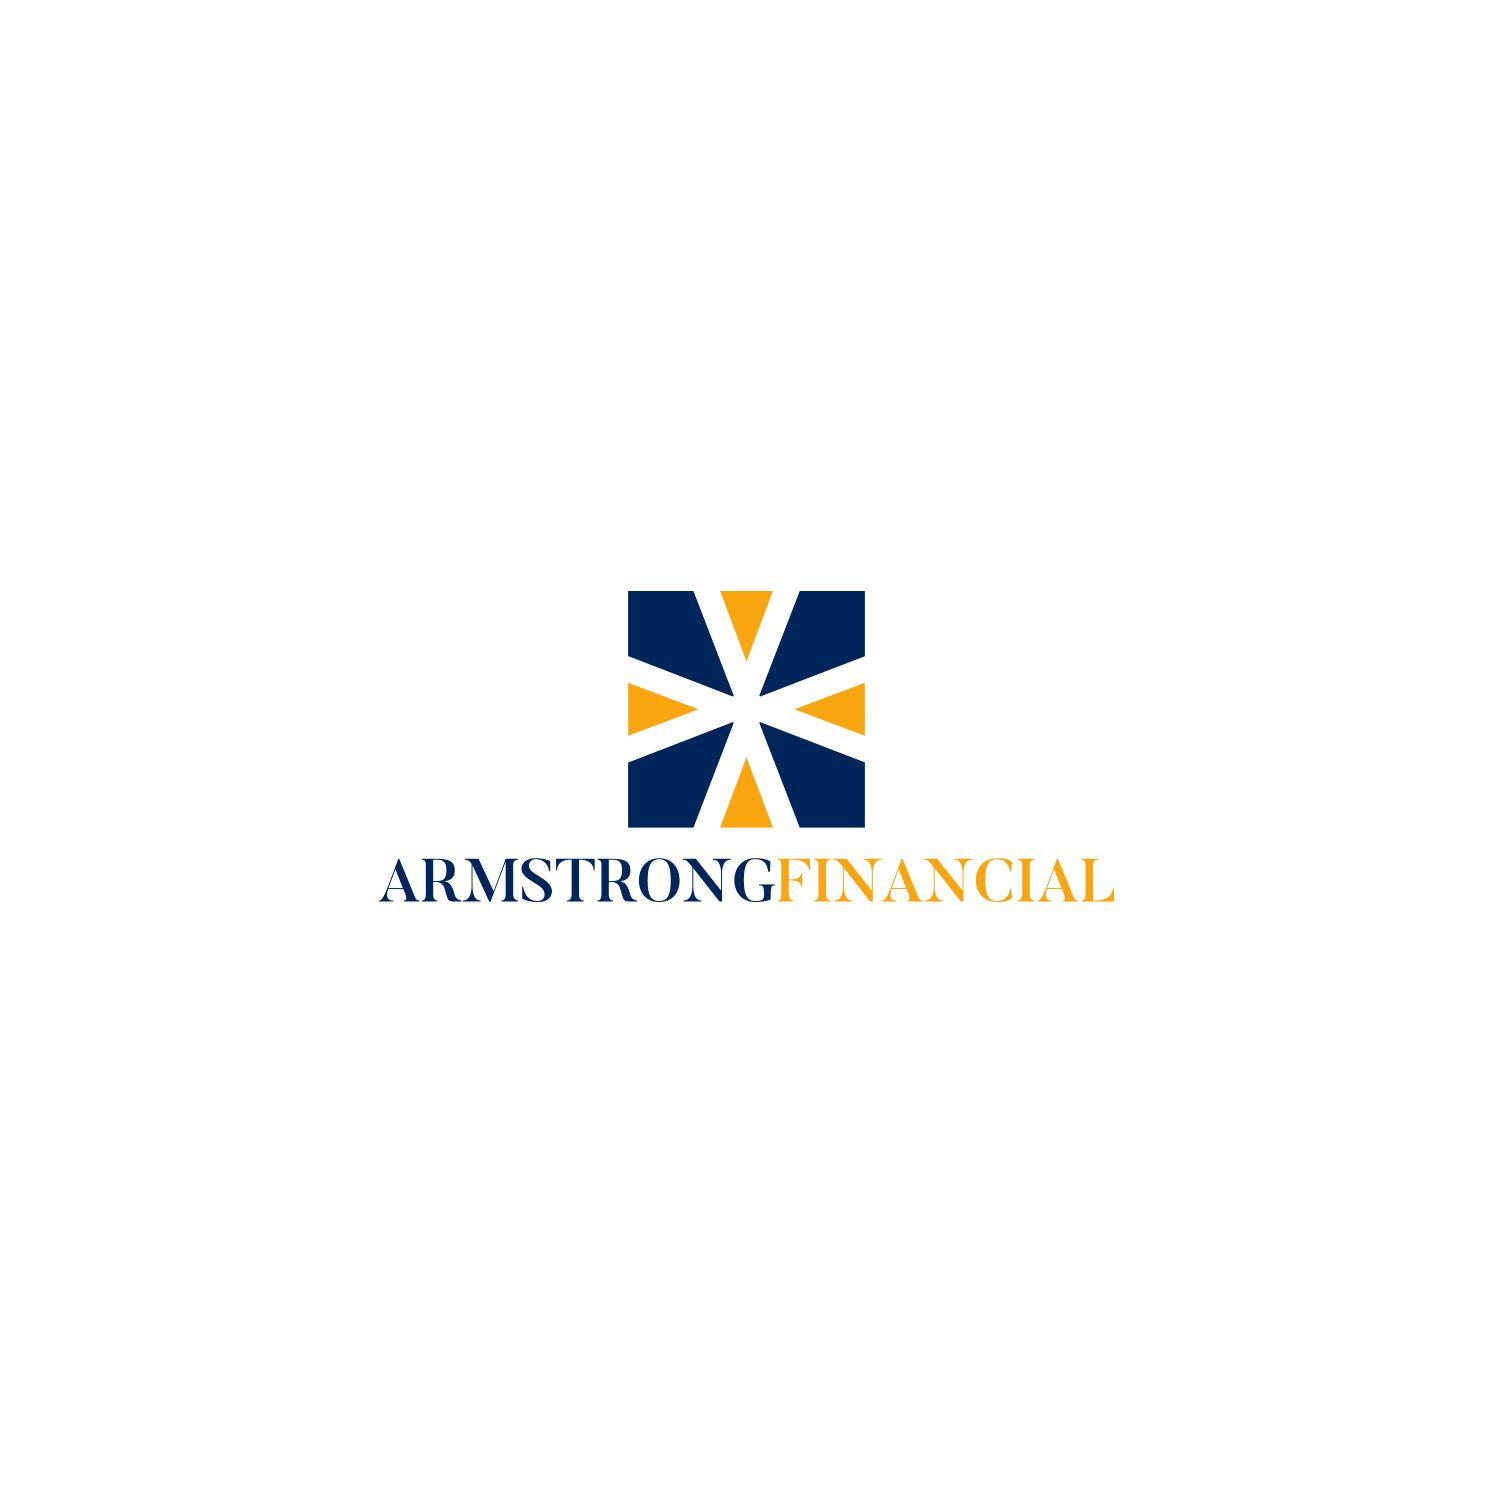 M Financial Logo - Serious, Professional, Financial Logo Design for Armstrong Financial